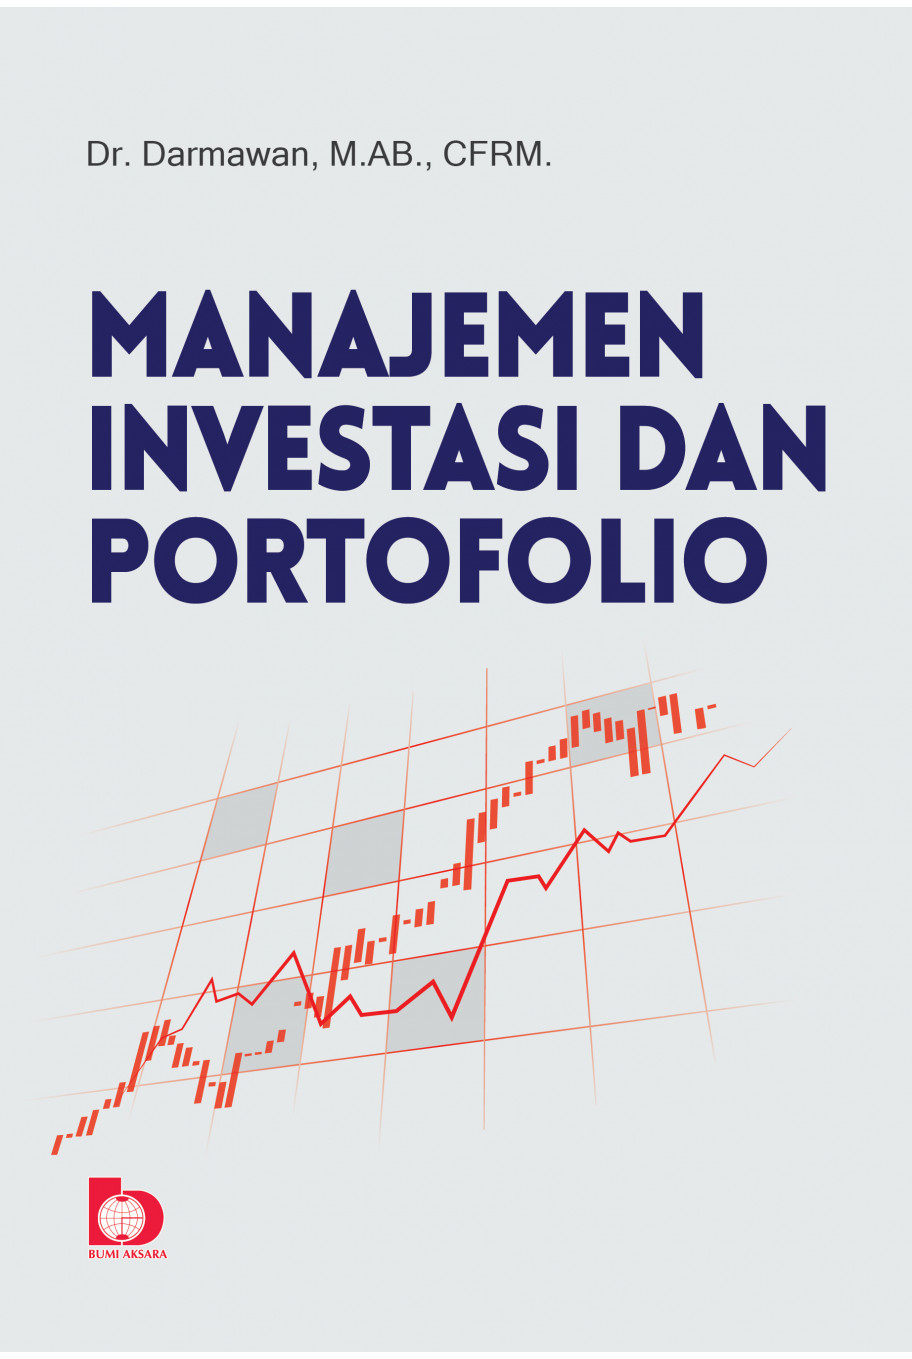 Manajemen Investasi dan Portofolio